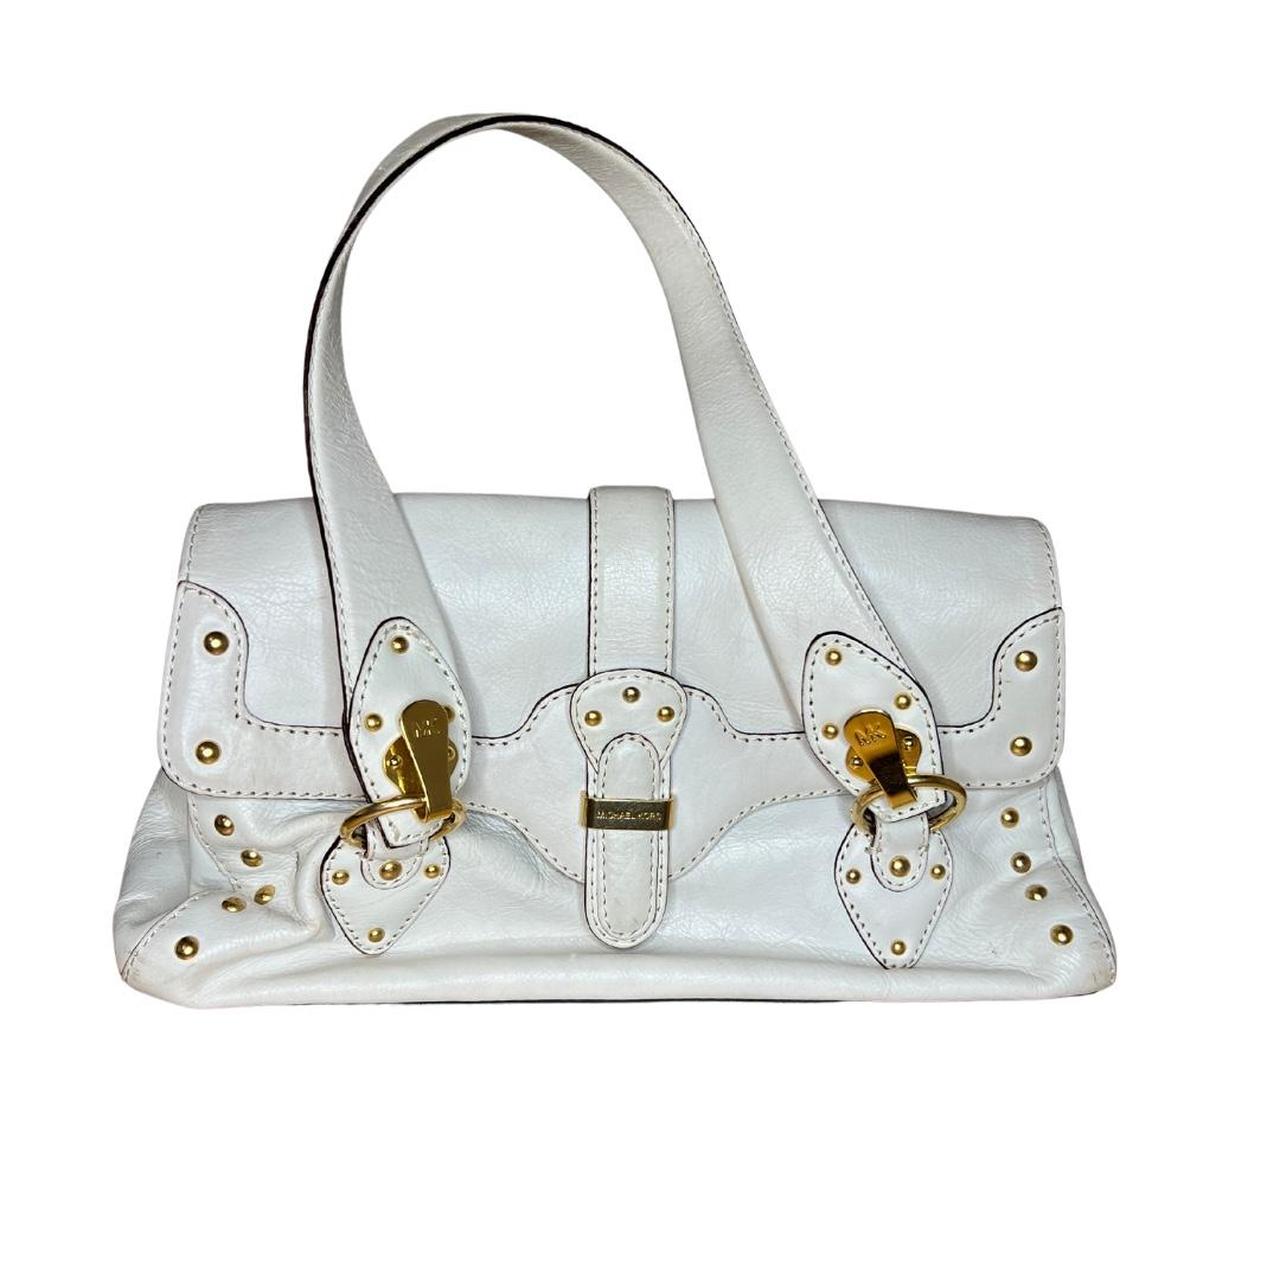 Buy the Michael Kors white leather studded shoulder bag | GoodwillFinds